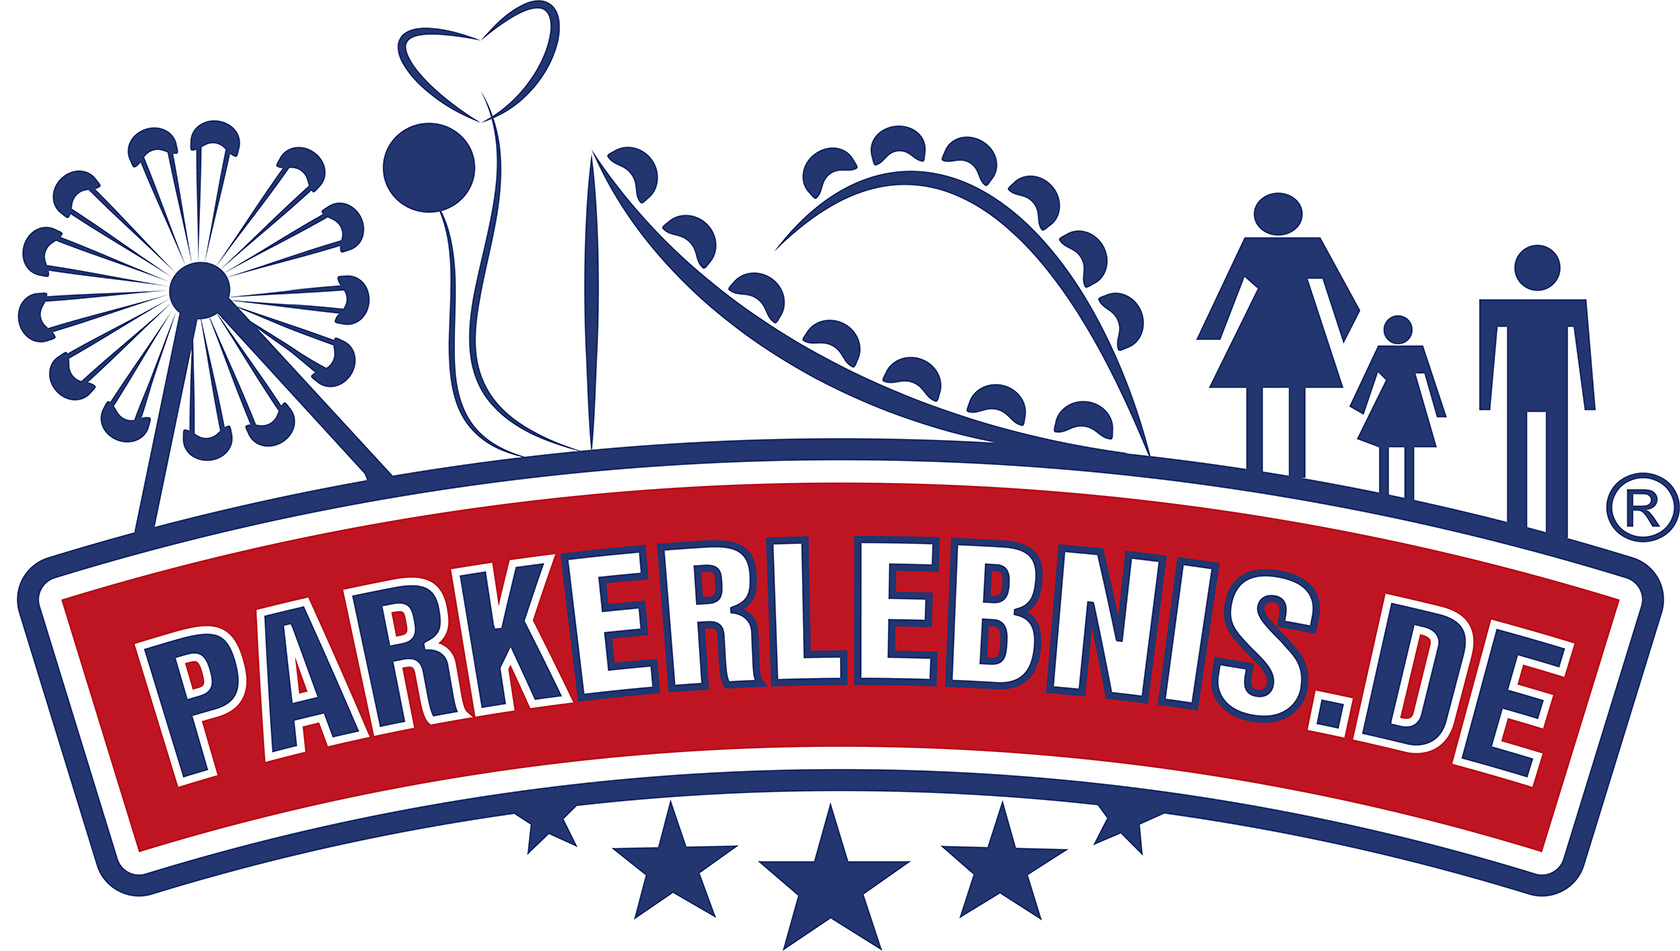 Parkerlebnis.de Freizeitpark-Magazin - Logo